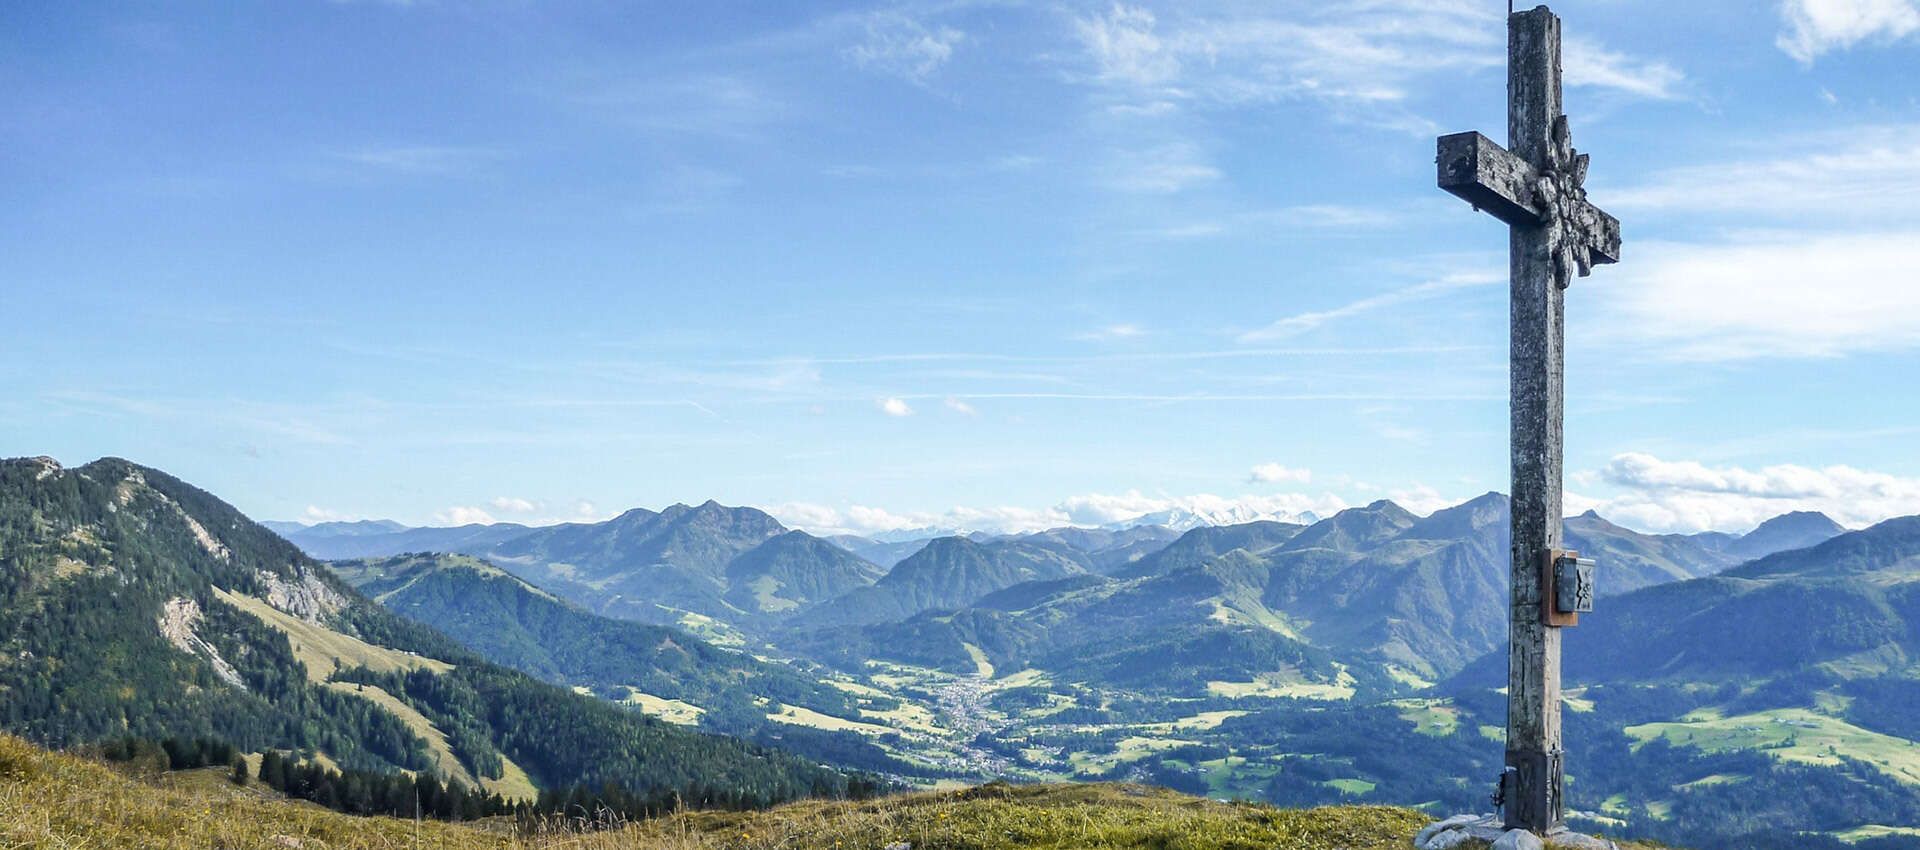 Mountain landscape of the Kitzbühel Alps